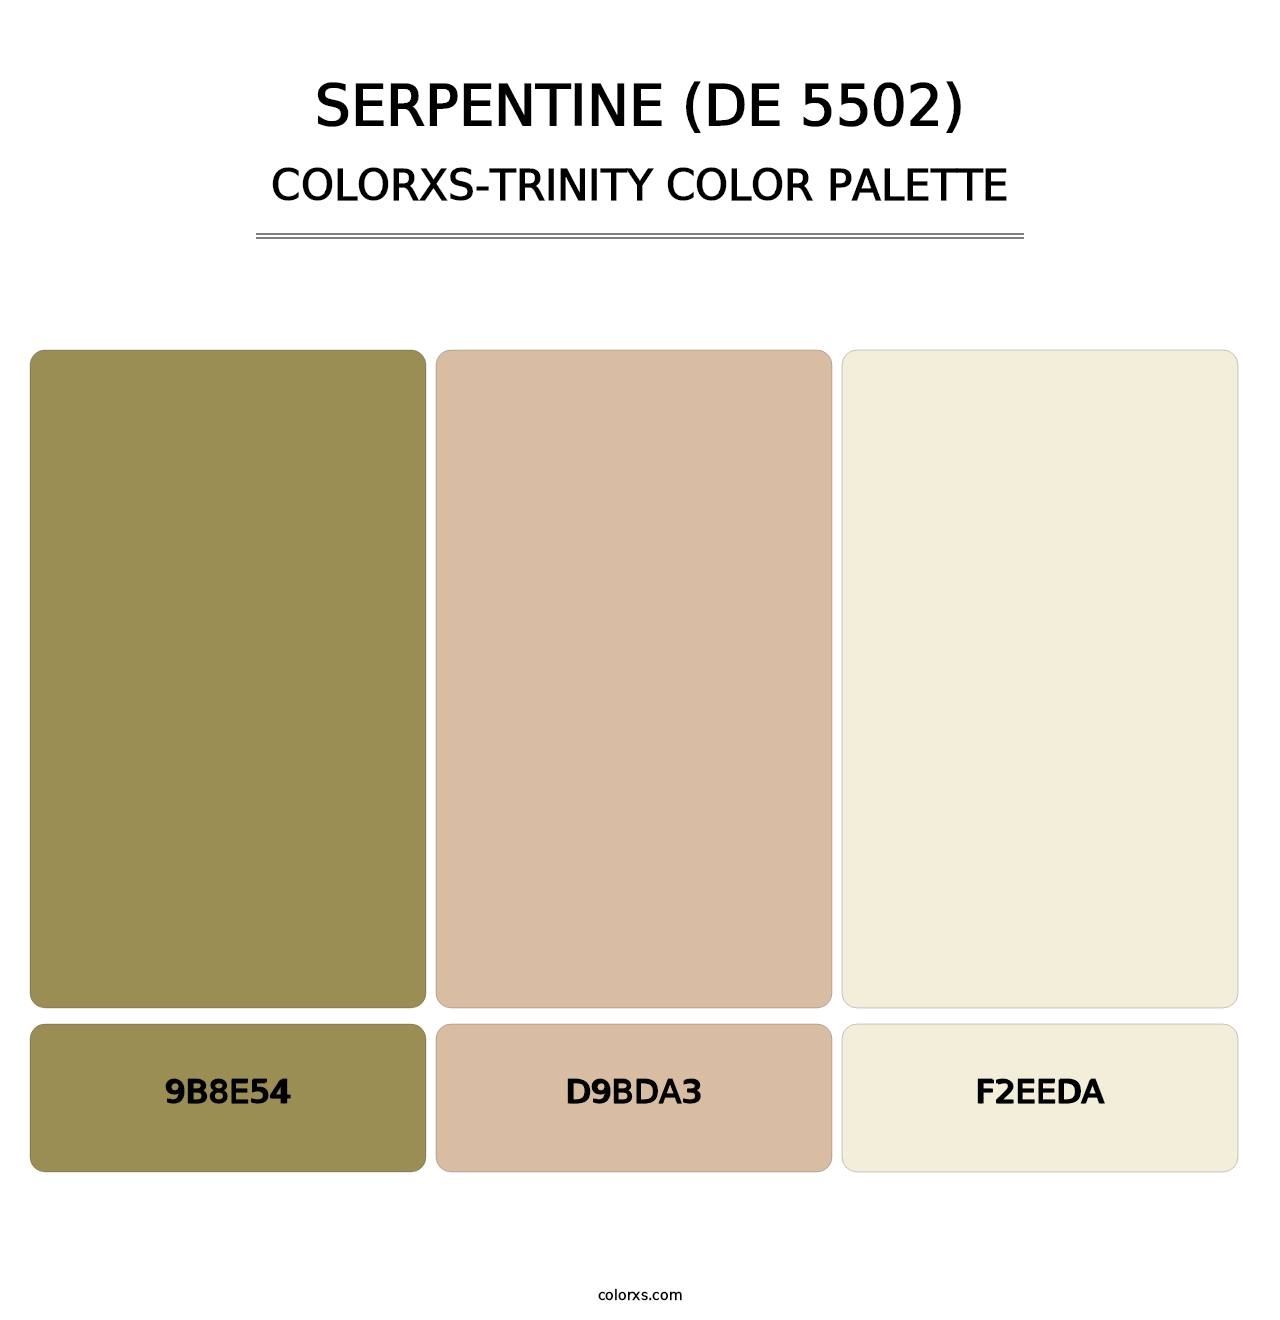 Serpentine (DE 5502) - Colorxs Trinity Palette